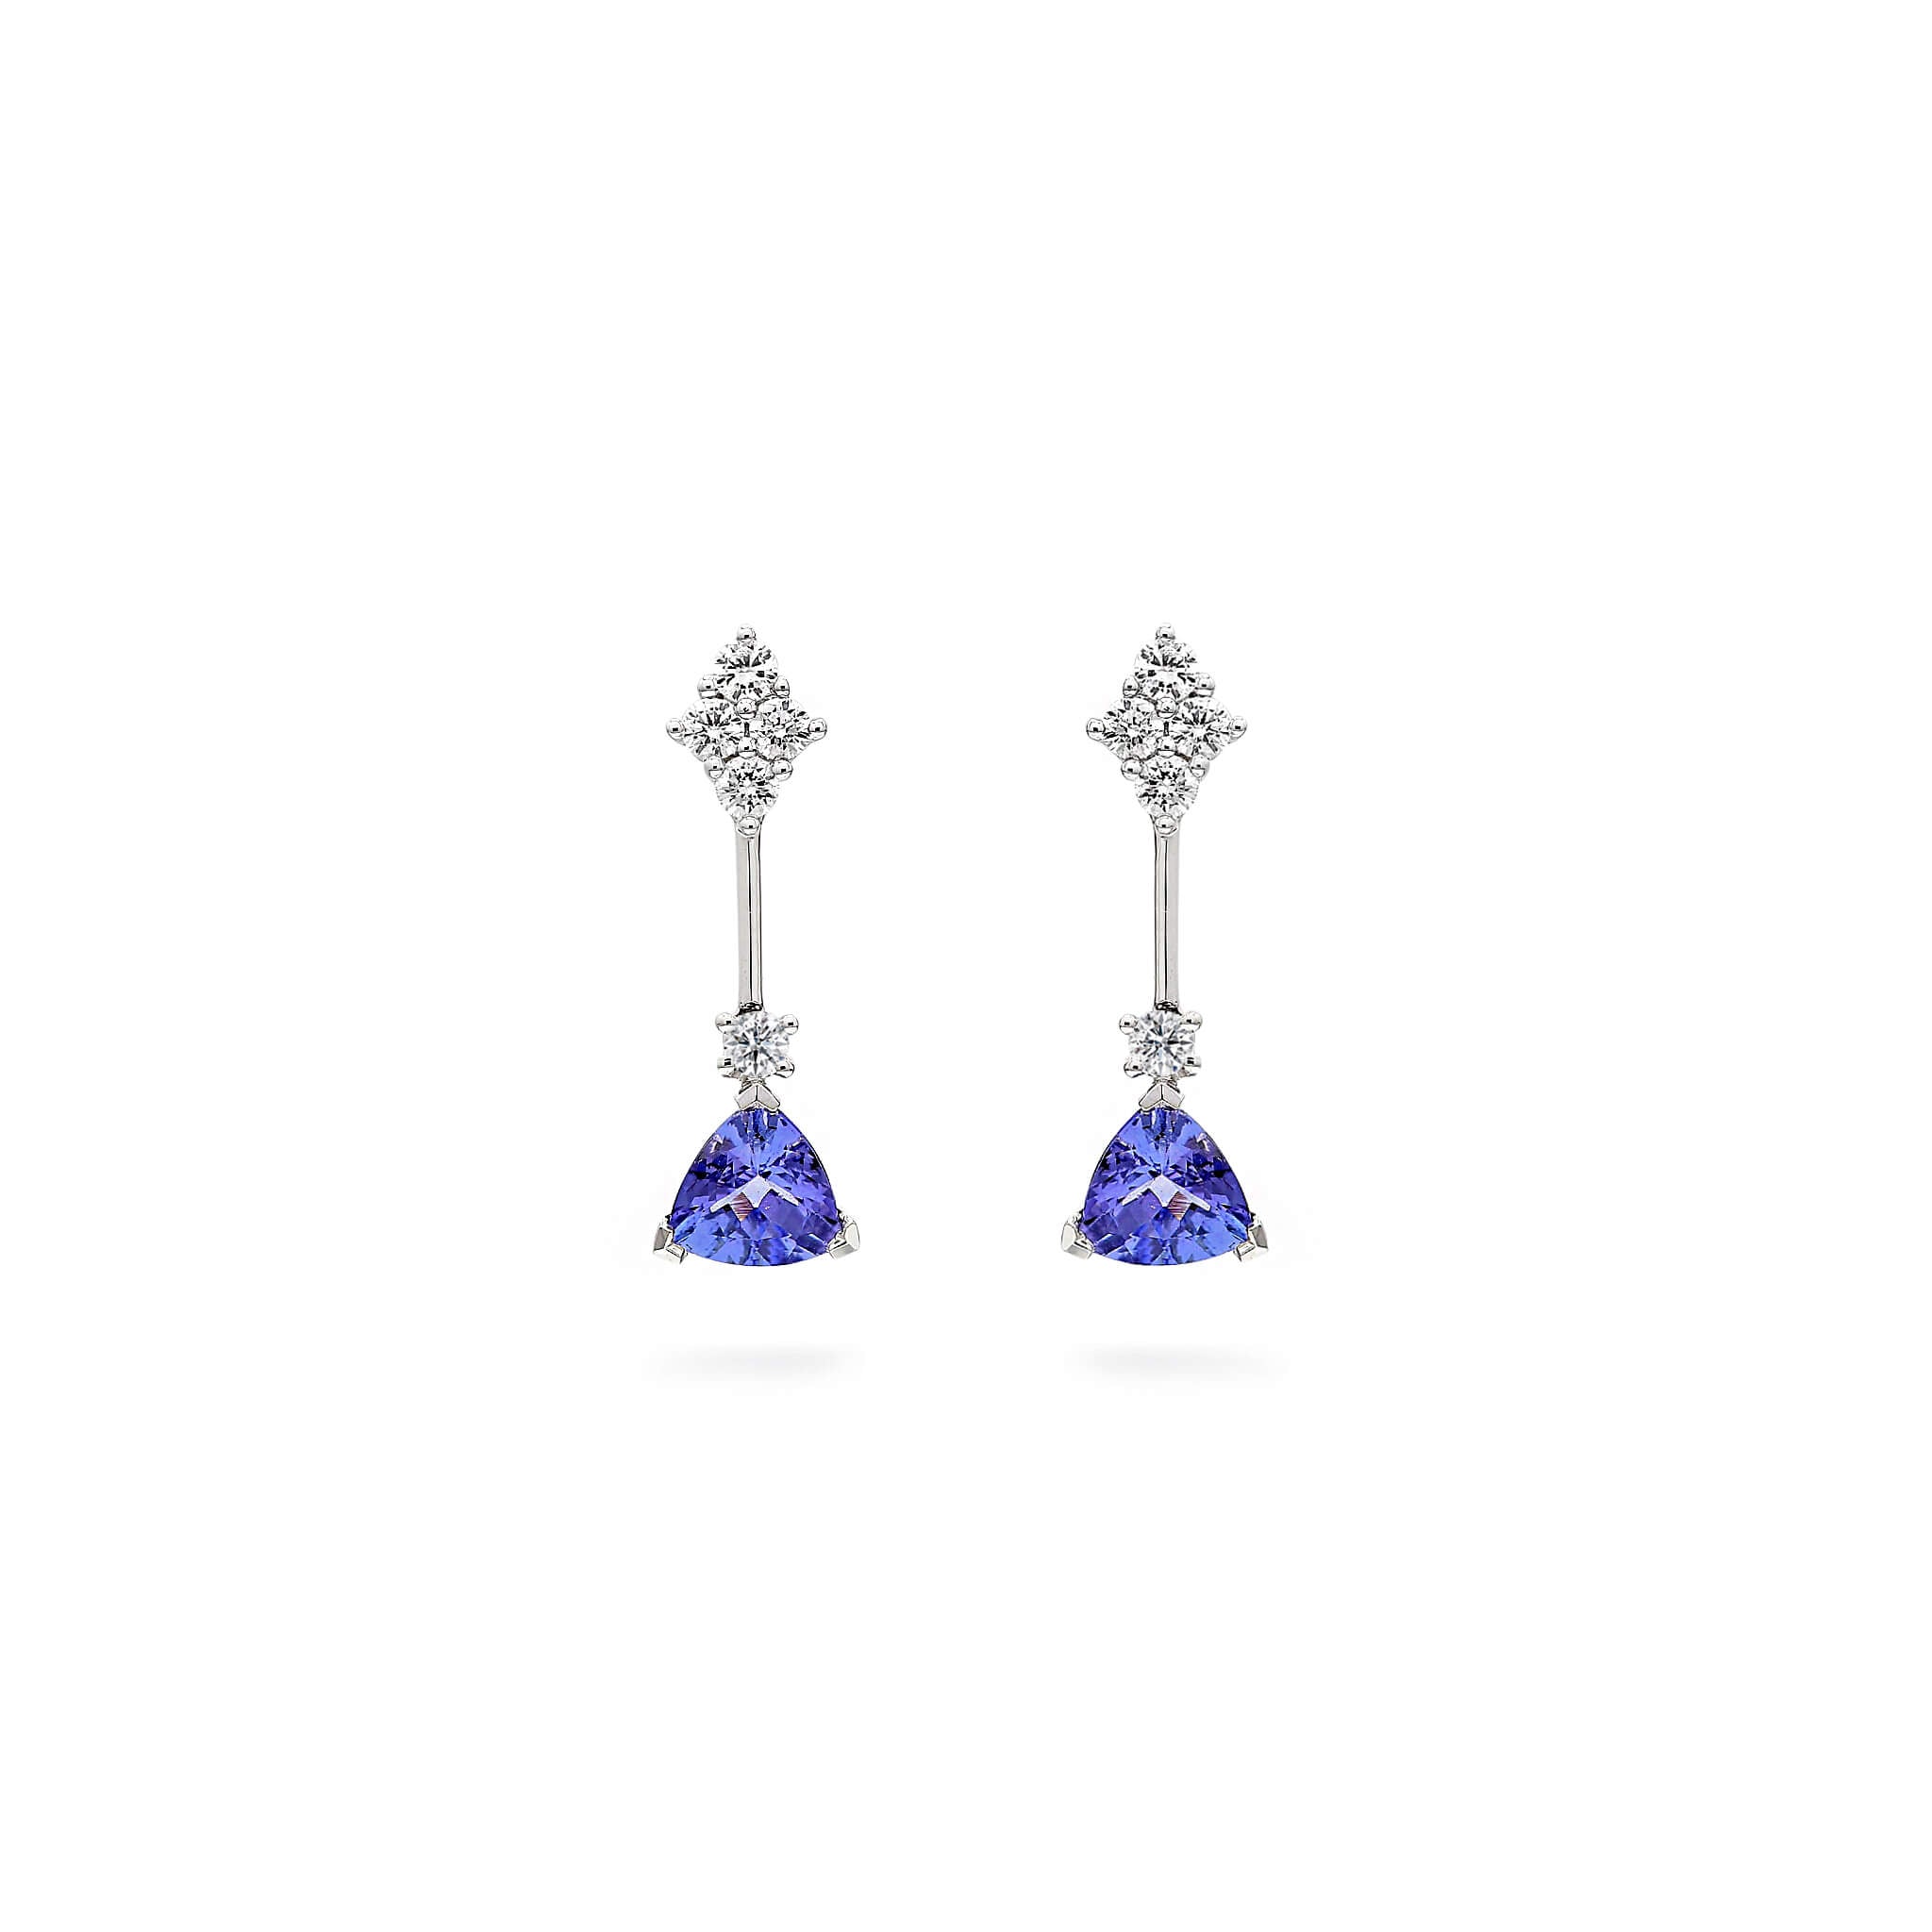 Tanzanite and Diamond Earrings - Front View - SHIMANSKY.CO.ZA